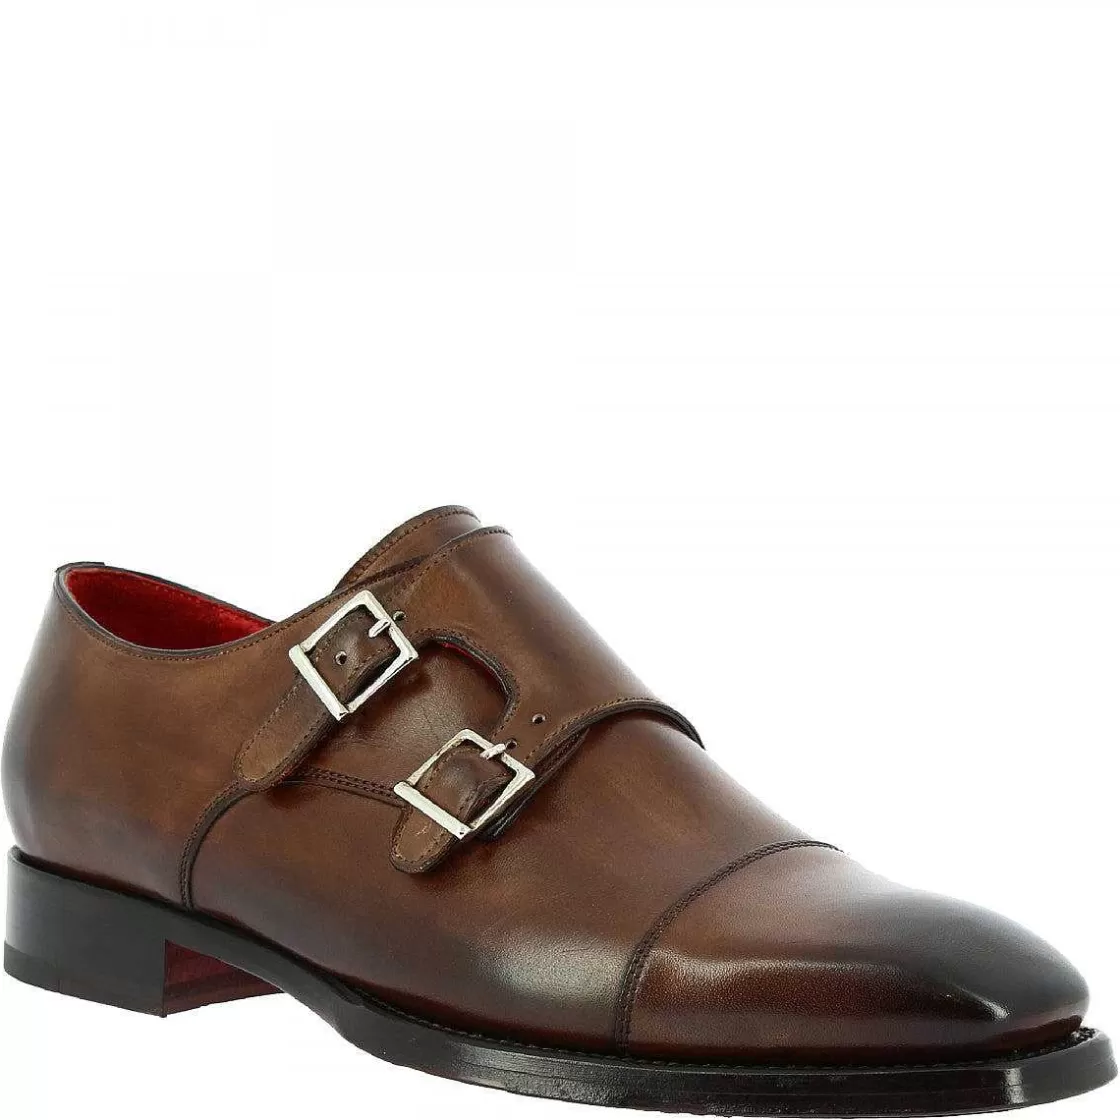 Leonardo Men'S Elegant Shoes With Double Buckle In Brandy Delave Calf Leather Handmade Sale